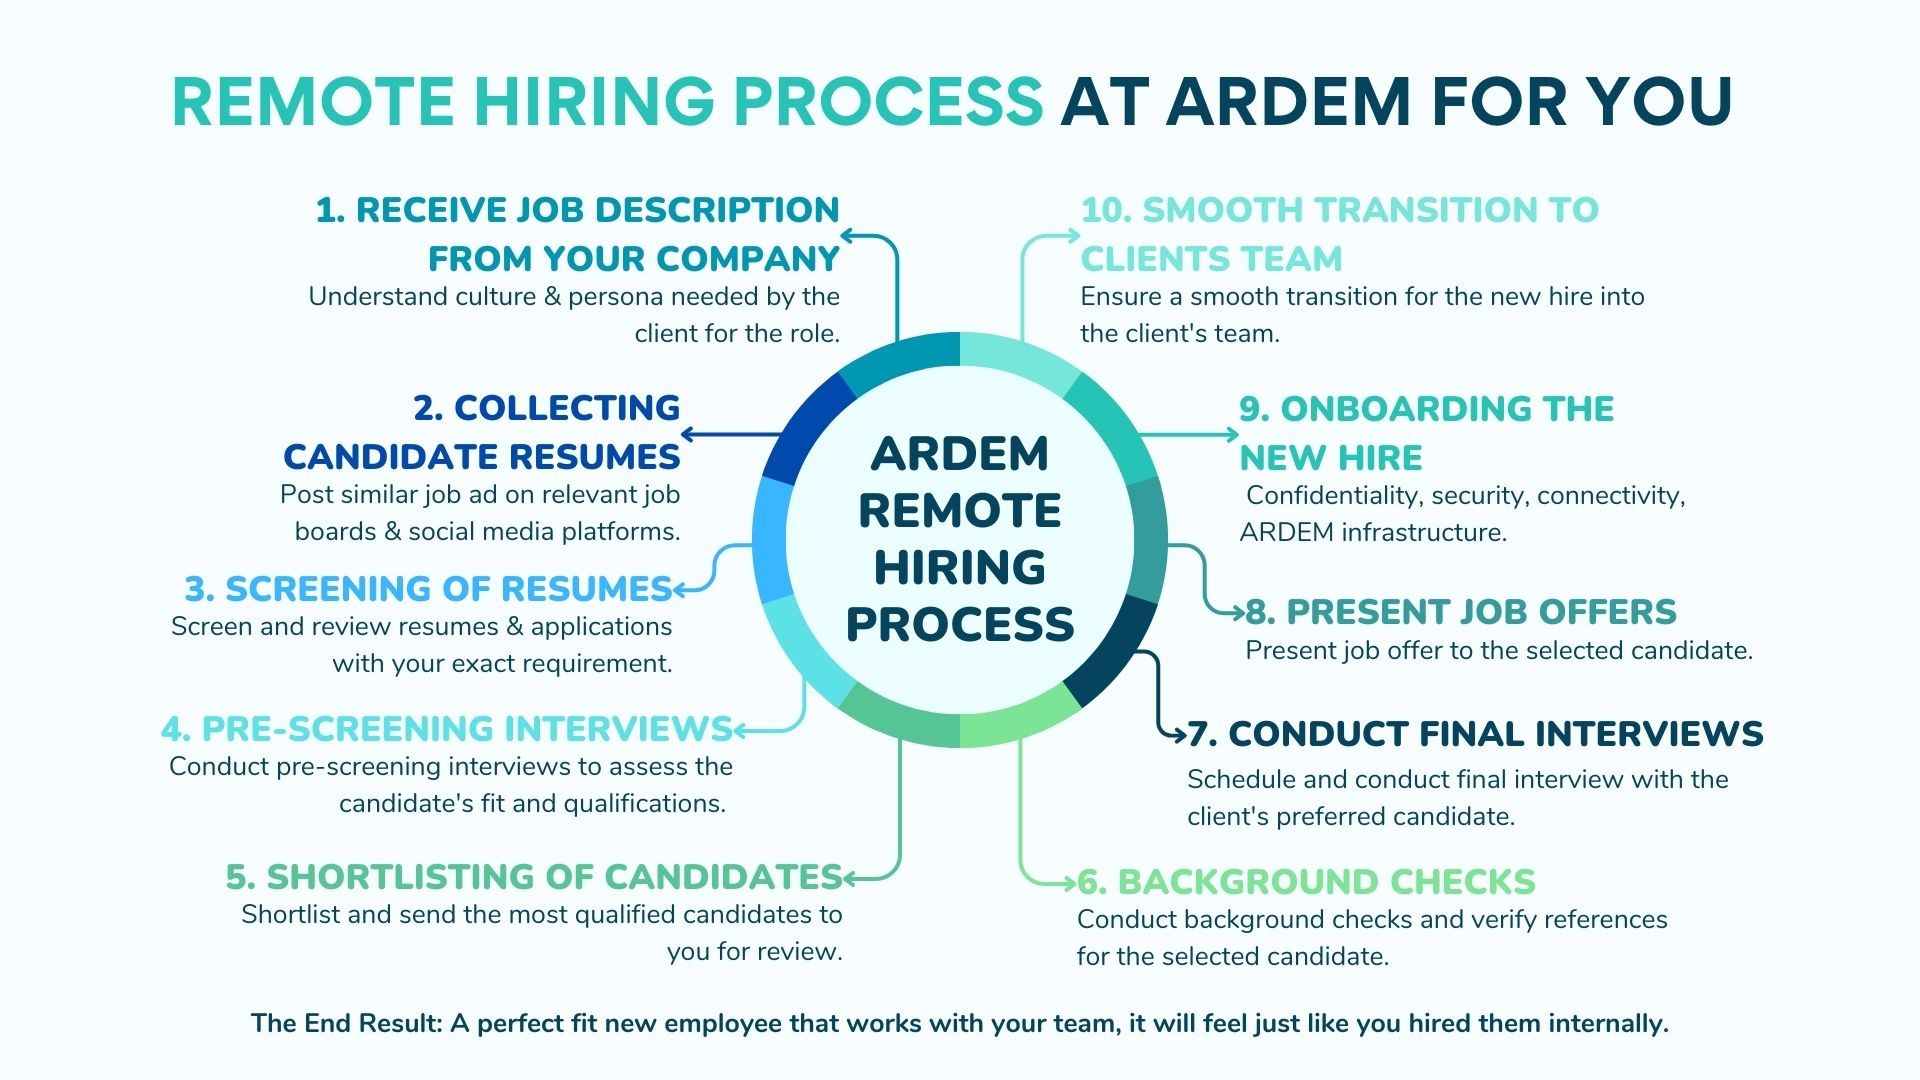 Remote Hiring Process at ARDEM remote-work